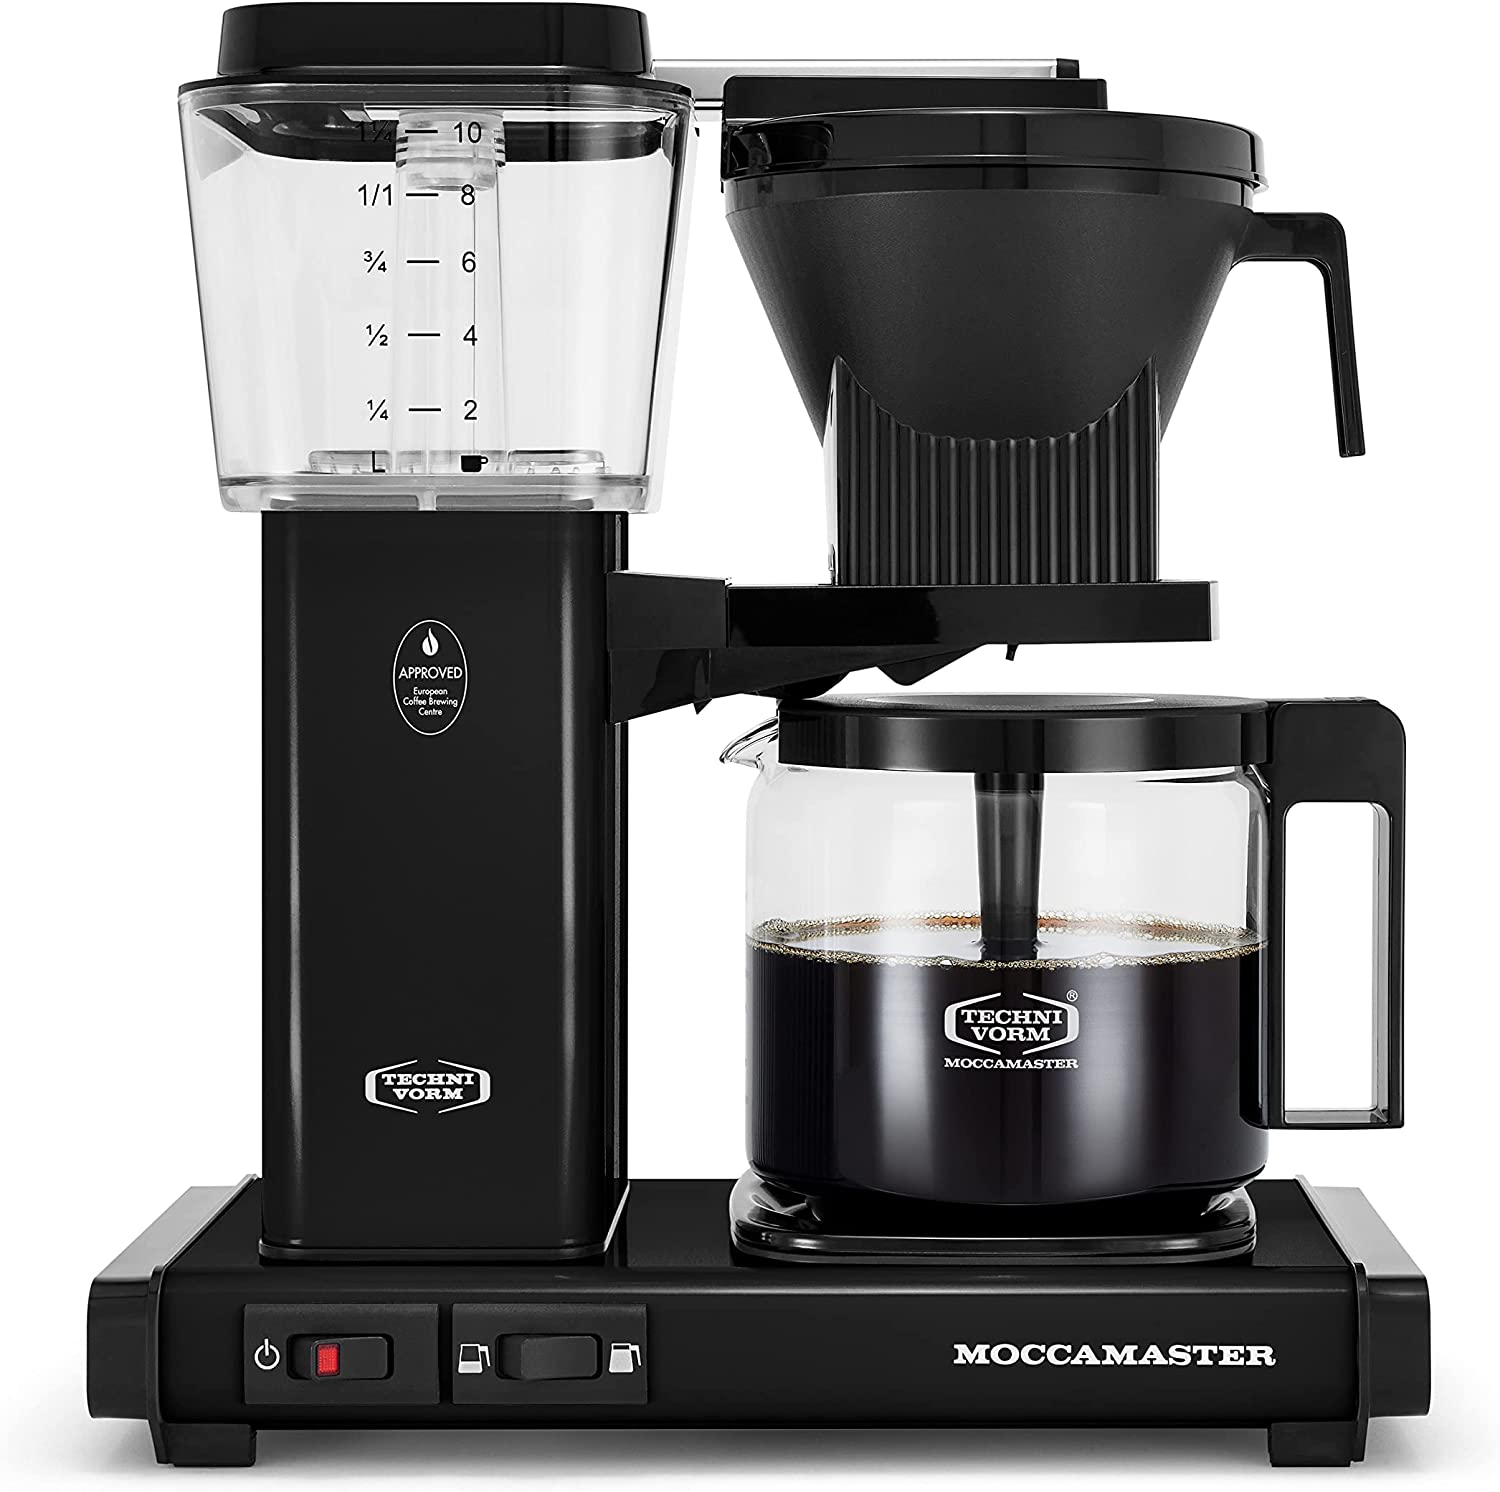 Technivorm Moccamaster 53937 KBGV 10-Cup Coffee Maker Black, 40 Ounce, 1.25l